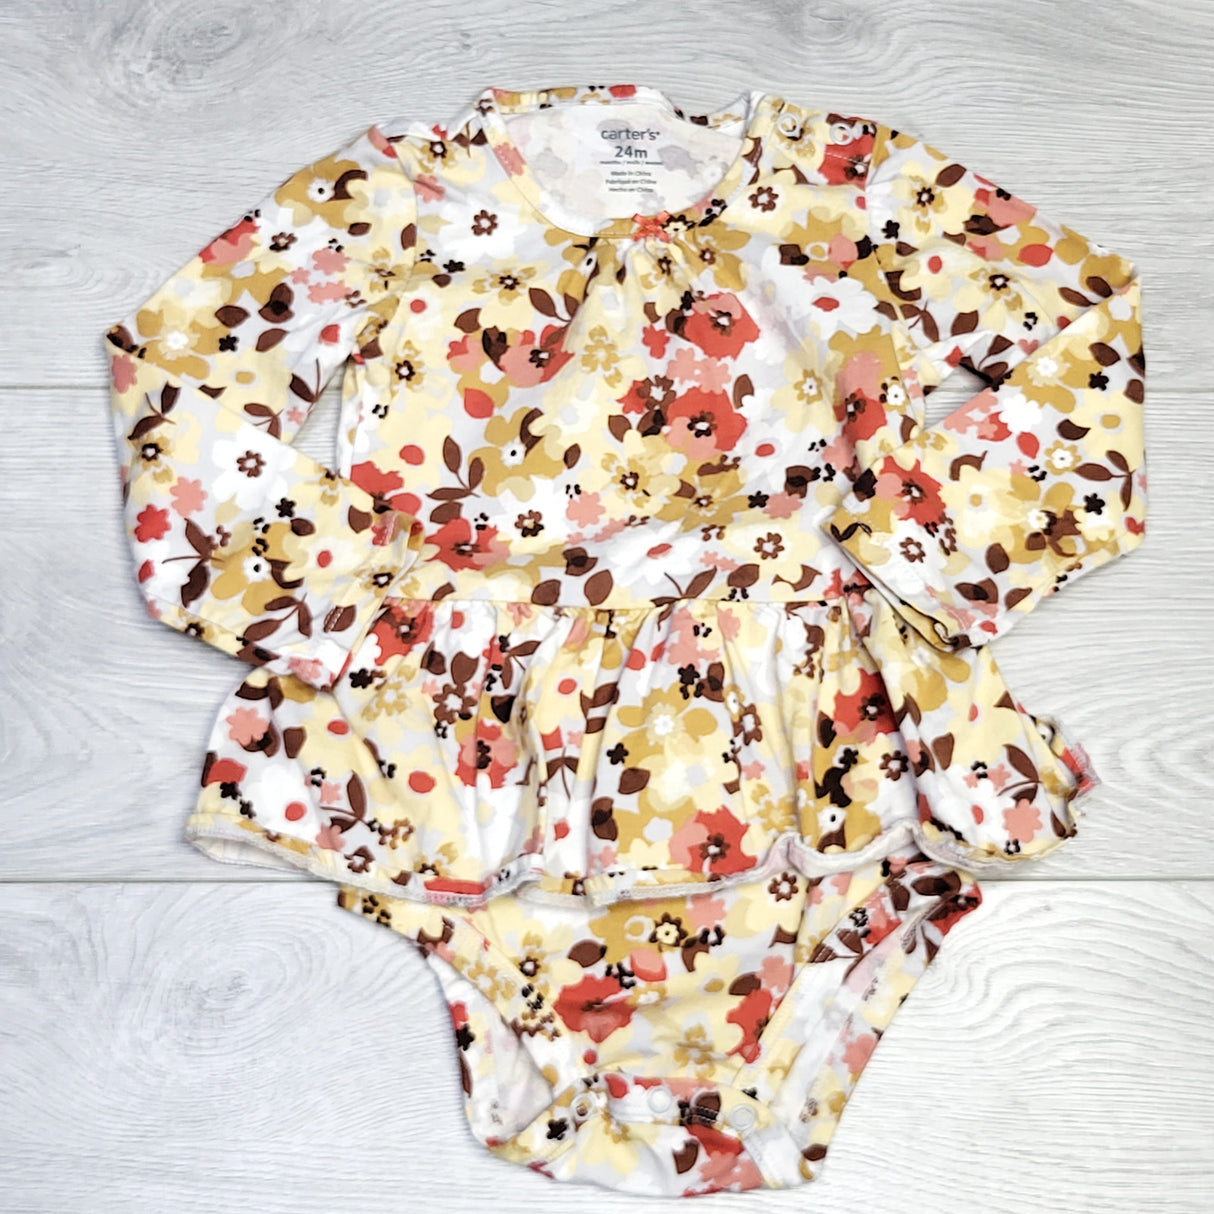 KJHN1 - Carters floral print shirted bodysuit. Size 24 months